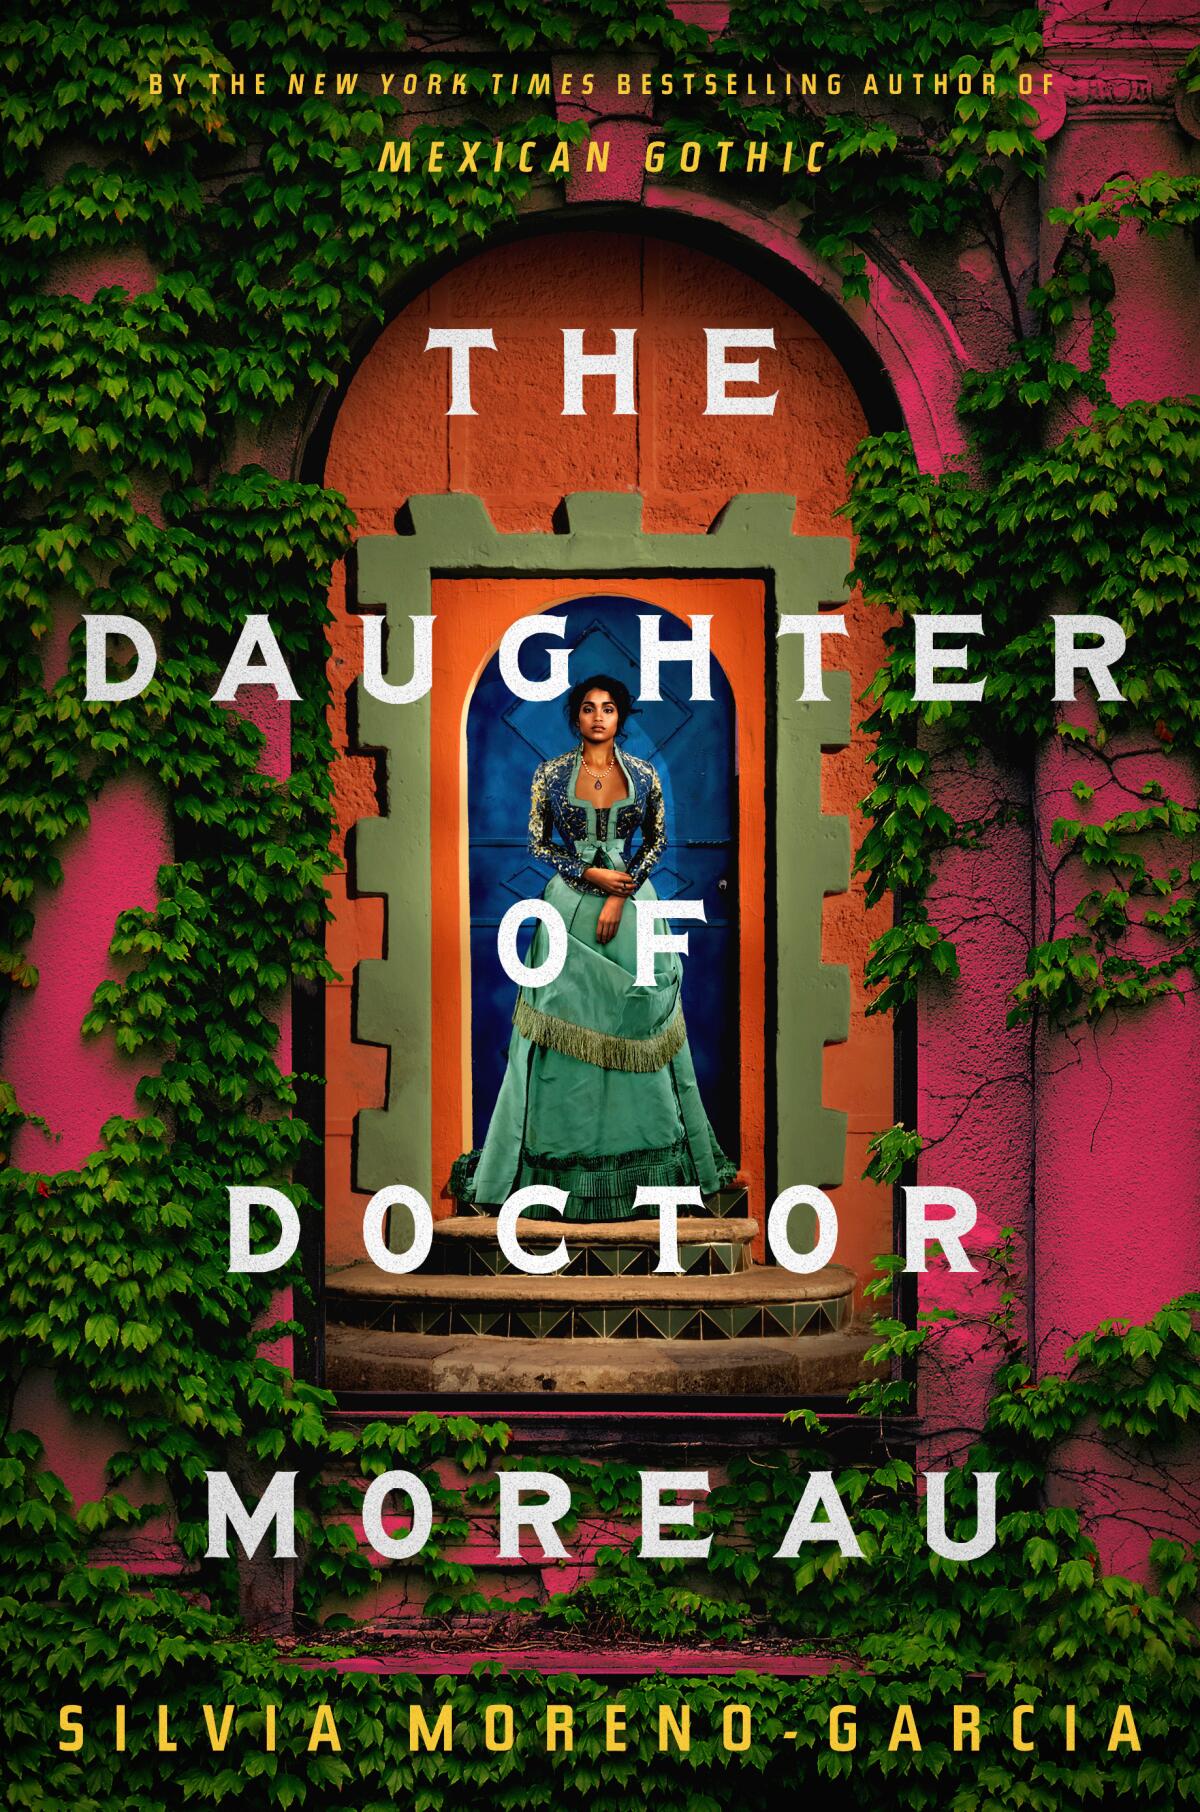 The book cover of Silvia Moreno-Garcia's "The Daughter of Doctor Moreau"